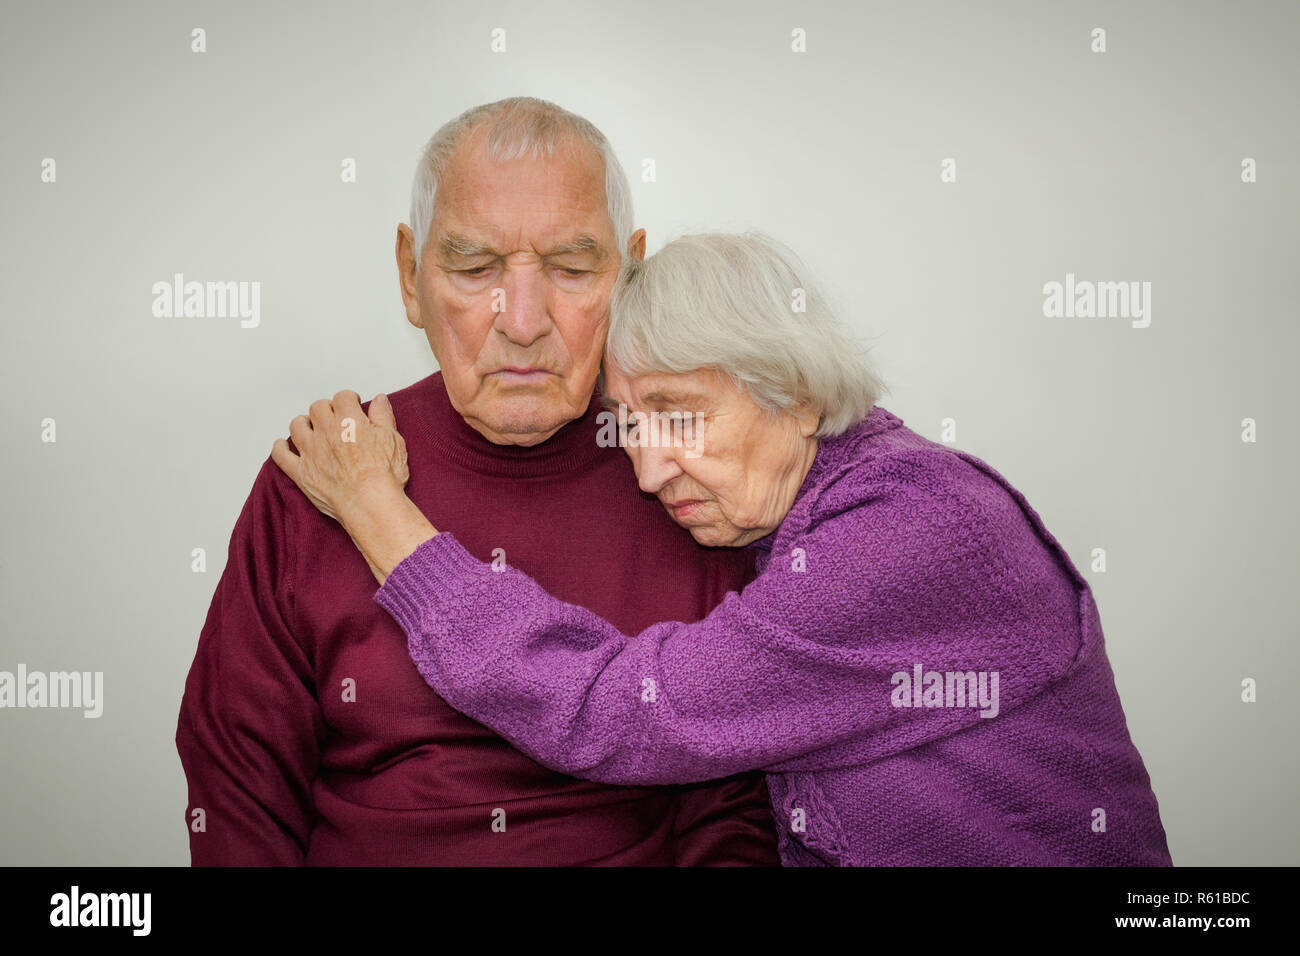 Sad elderly couple on a gray background Stock Photo